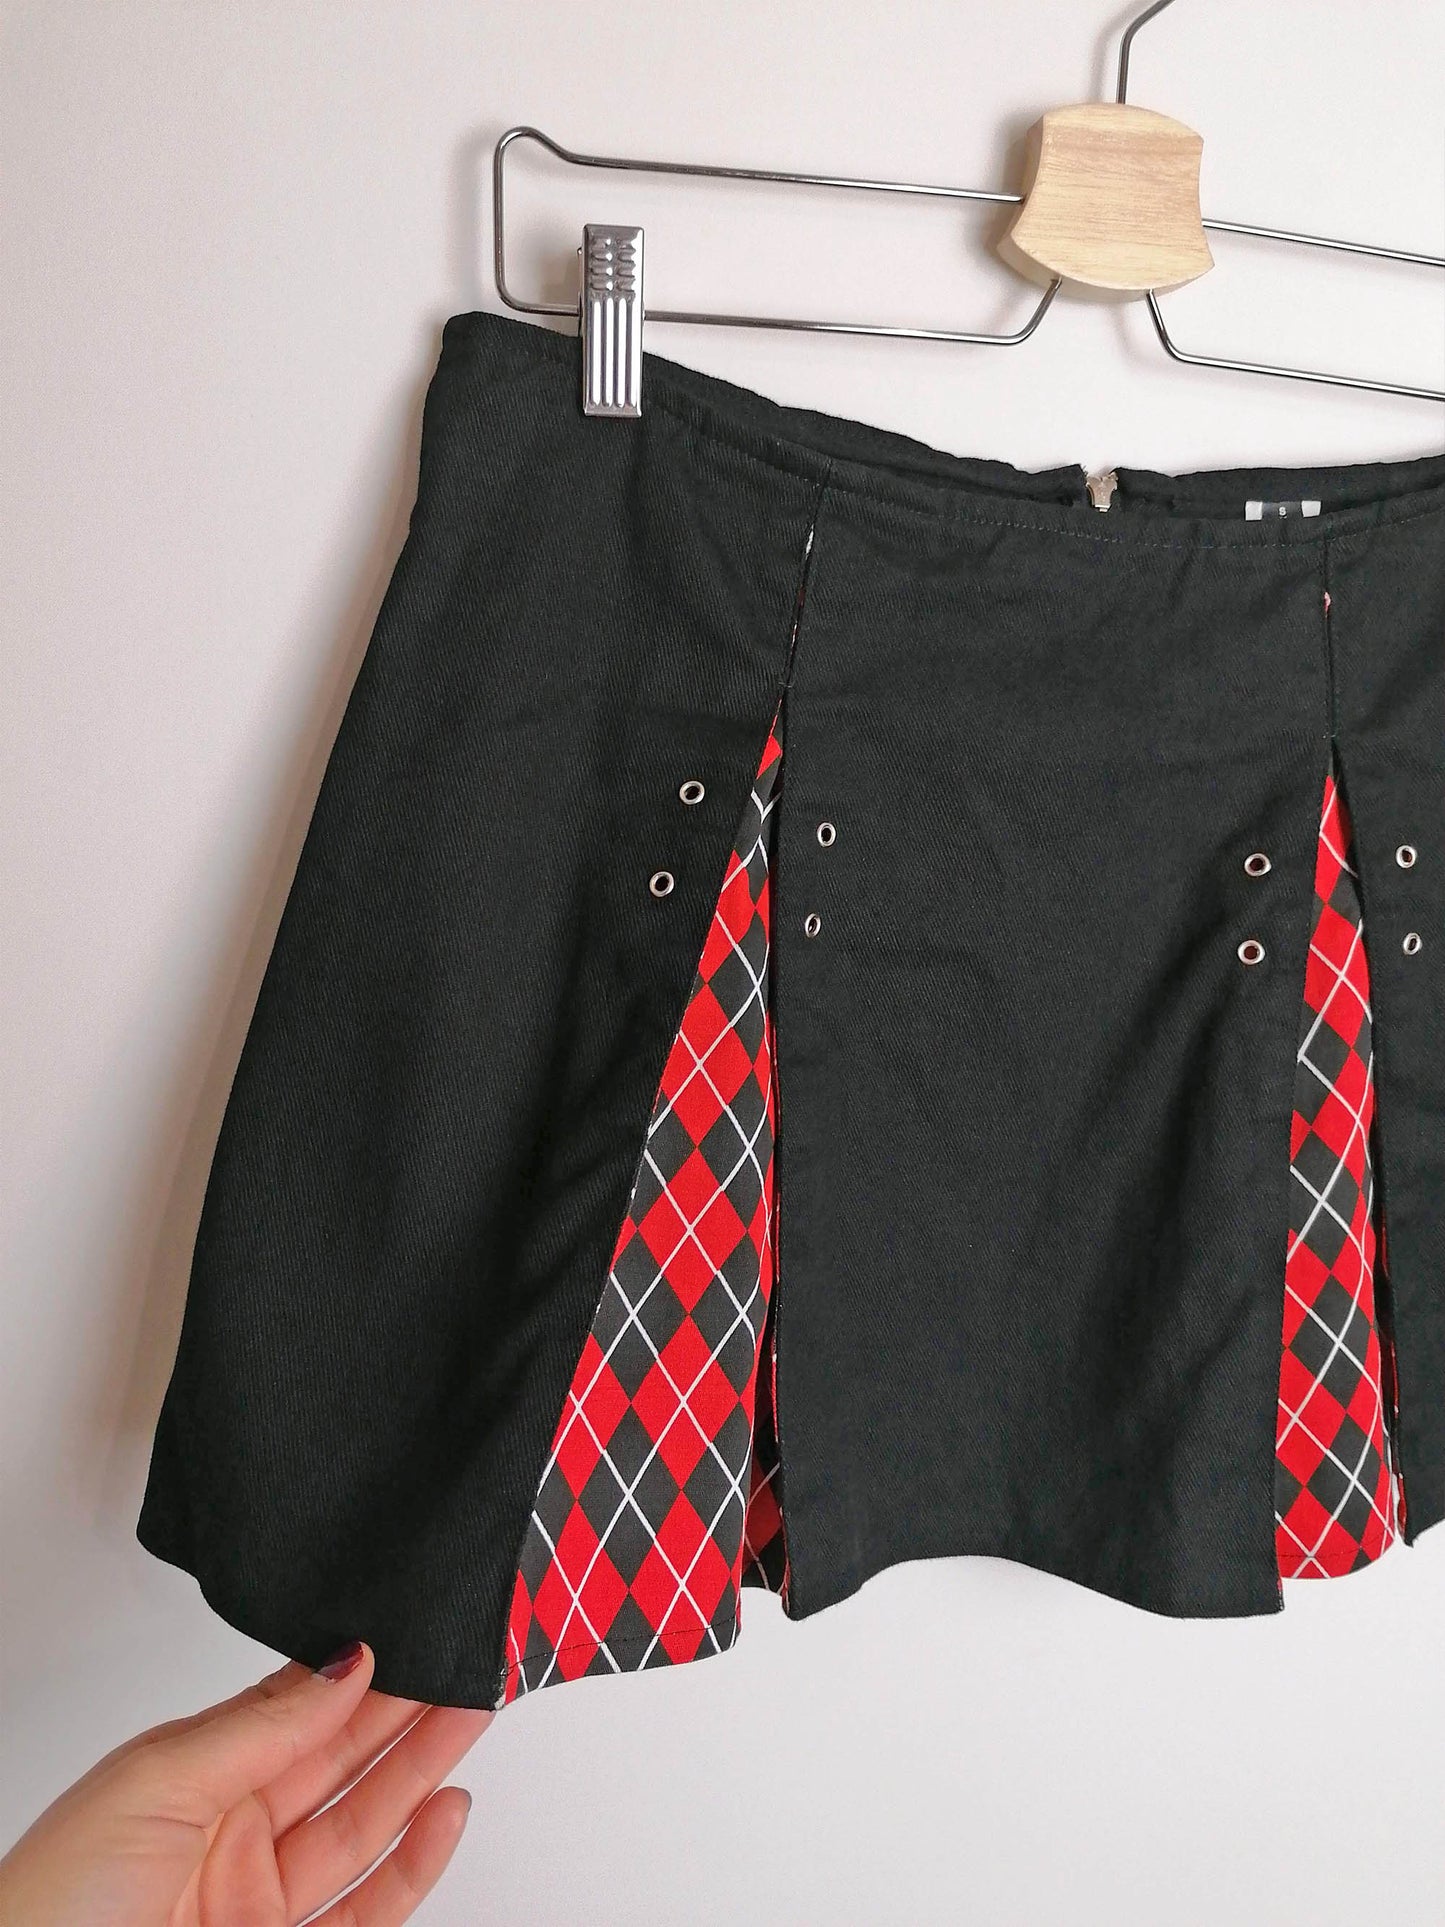 Grunge Hot Topic Mini Skirt ~ size L